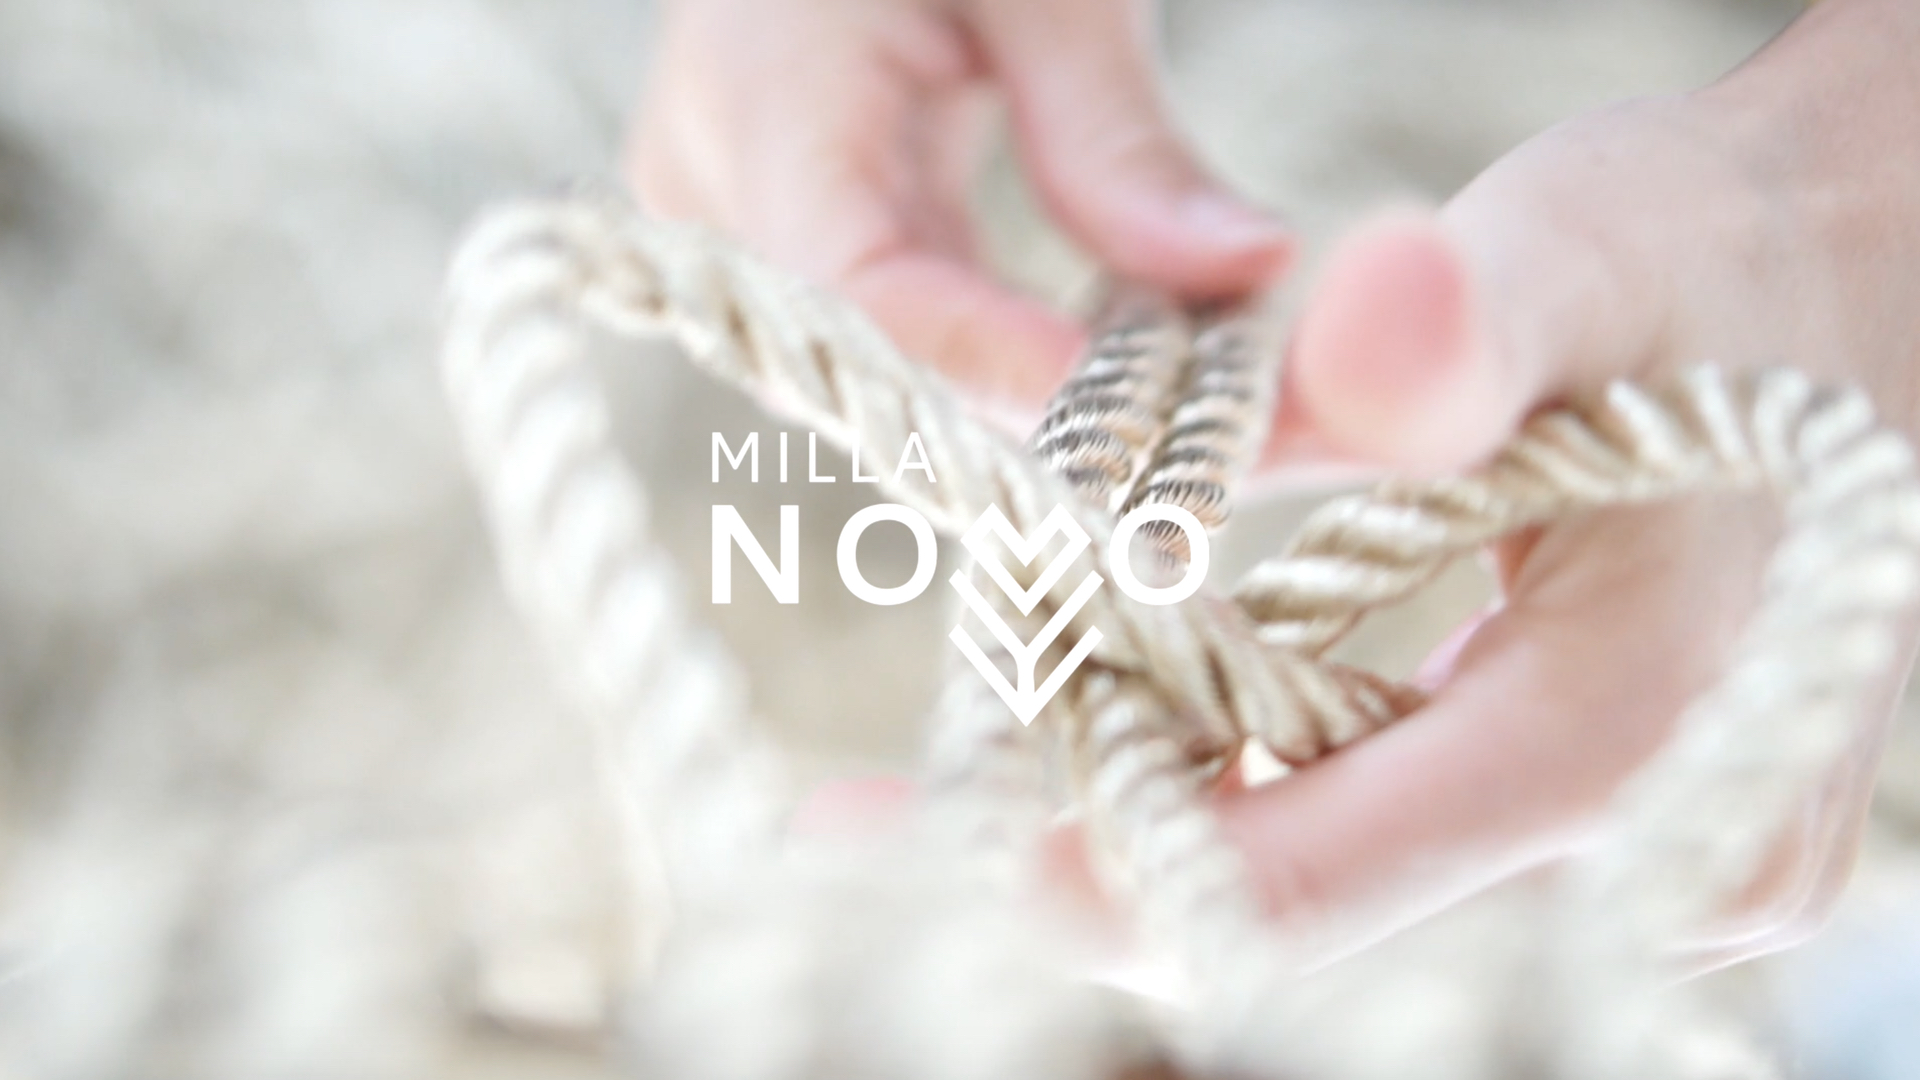 Milla Novo – Luxury artist video production image